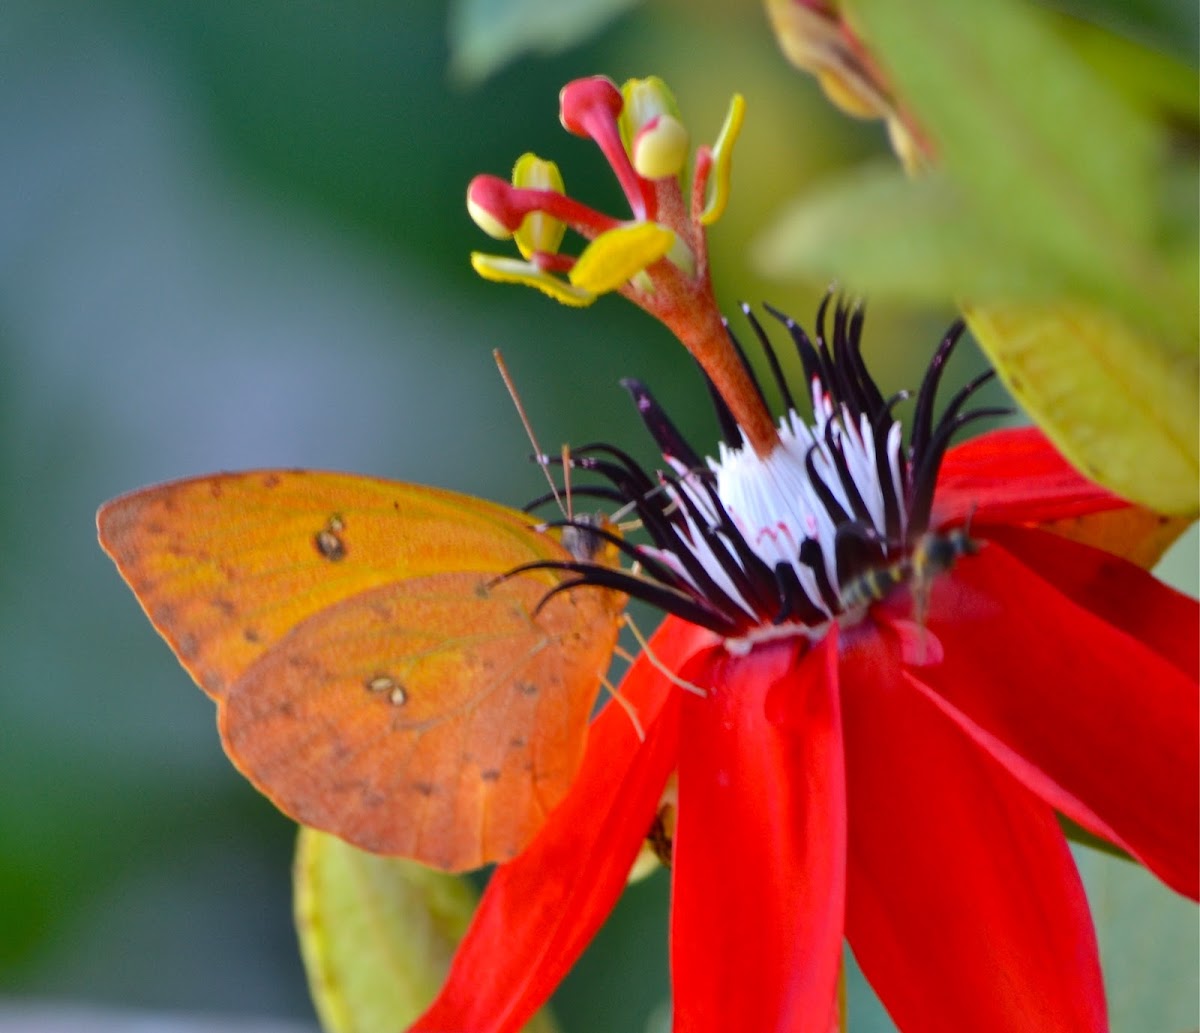 Orange-barred Sulphur Butterfly-Female